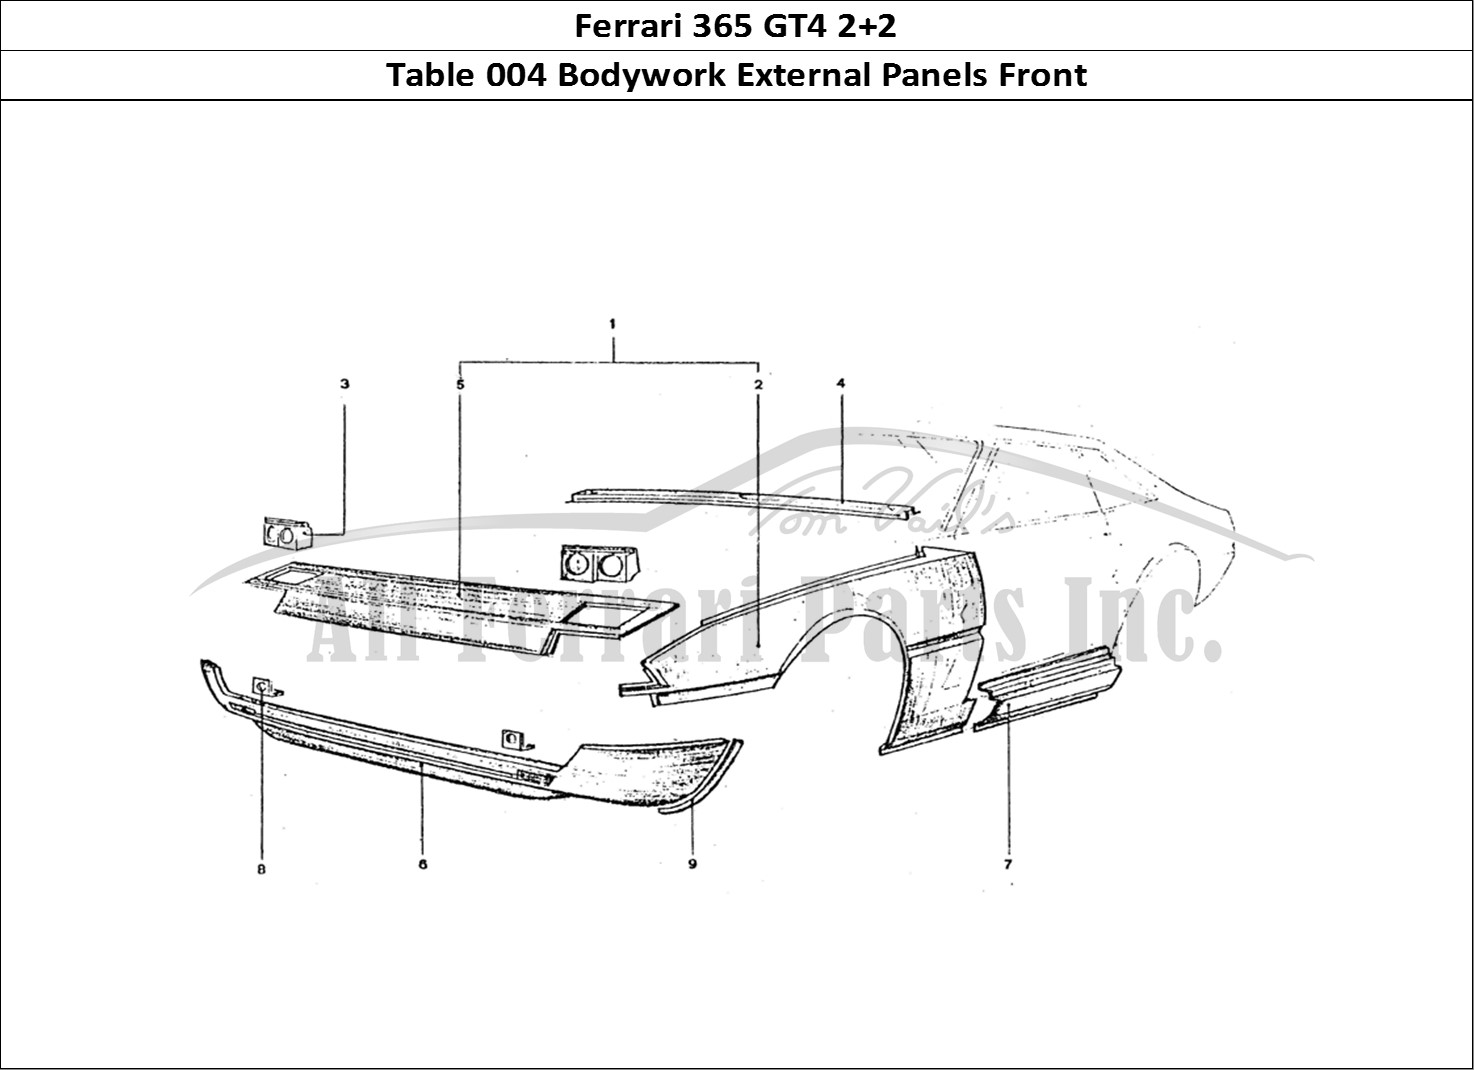 Ferrari Parts Ferrari 365 GT4 2+2 Coachwork Page 004 Front End Panels